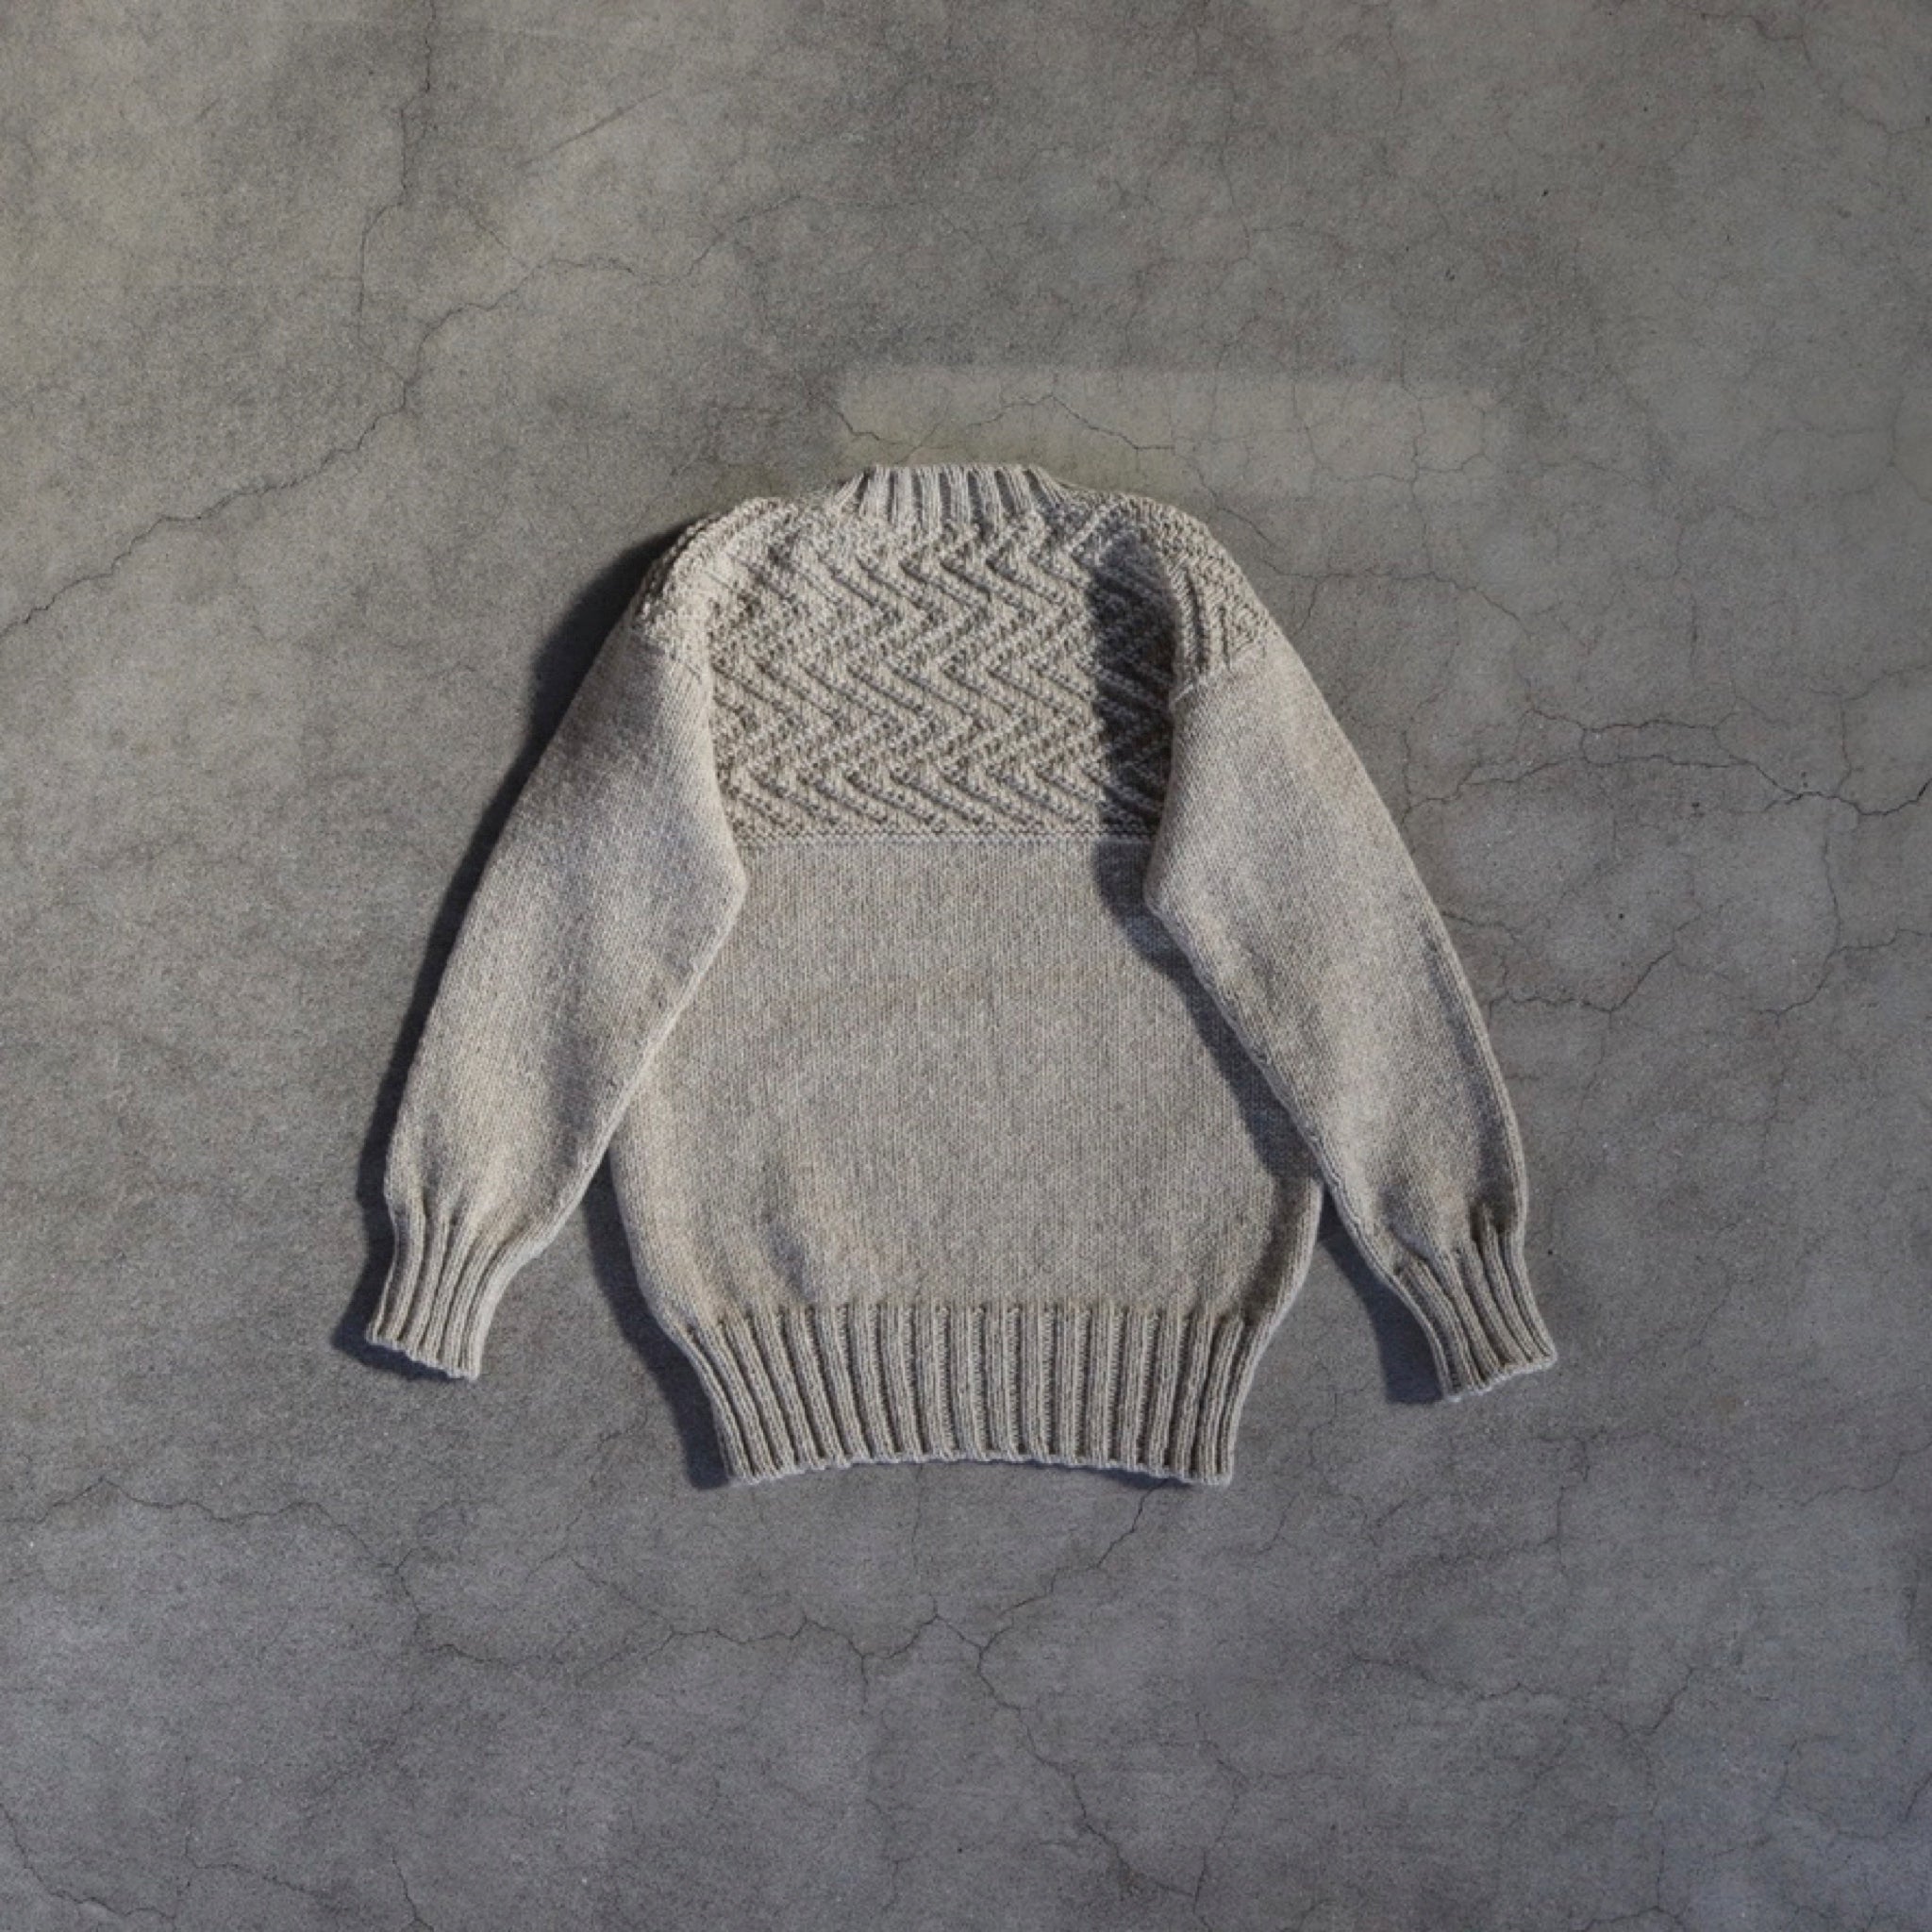 Kesennuma knitting etude - 2